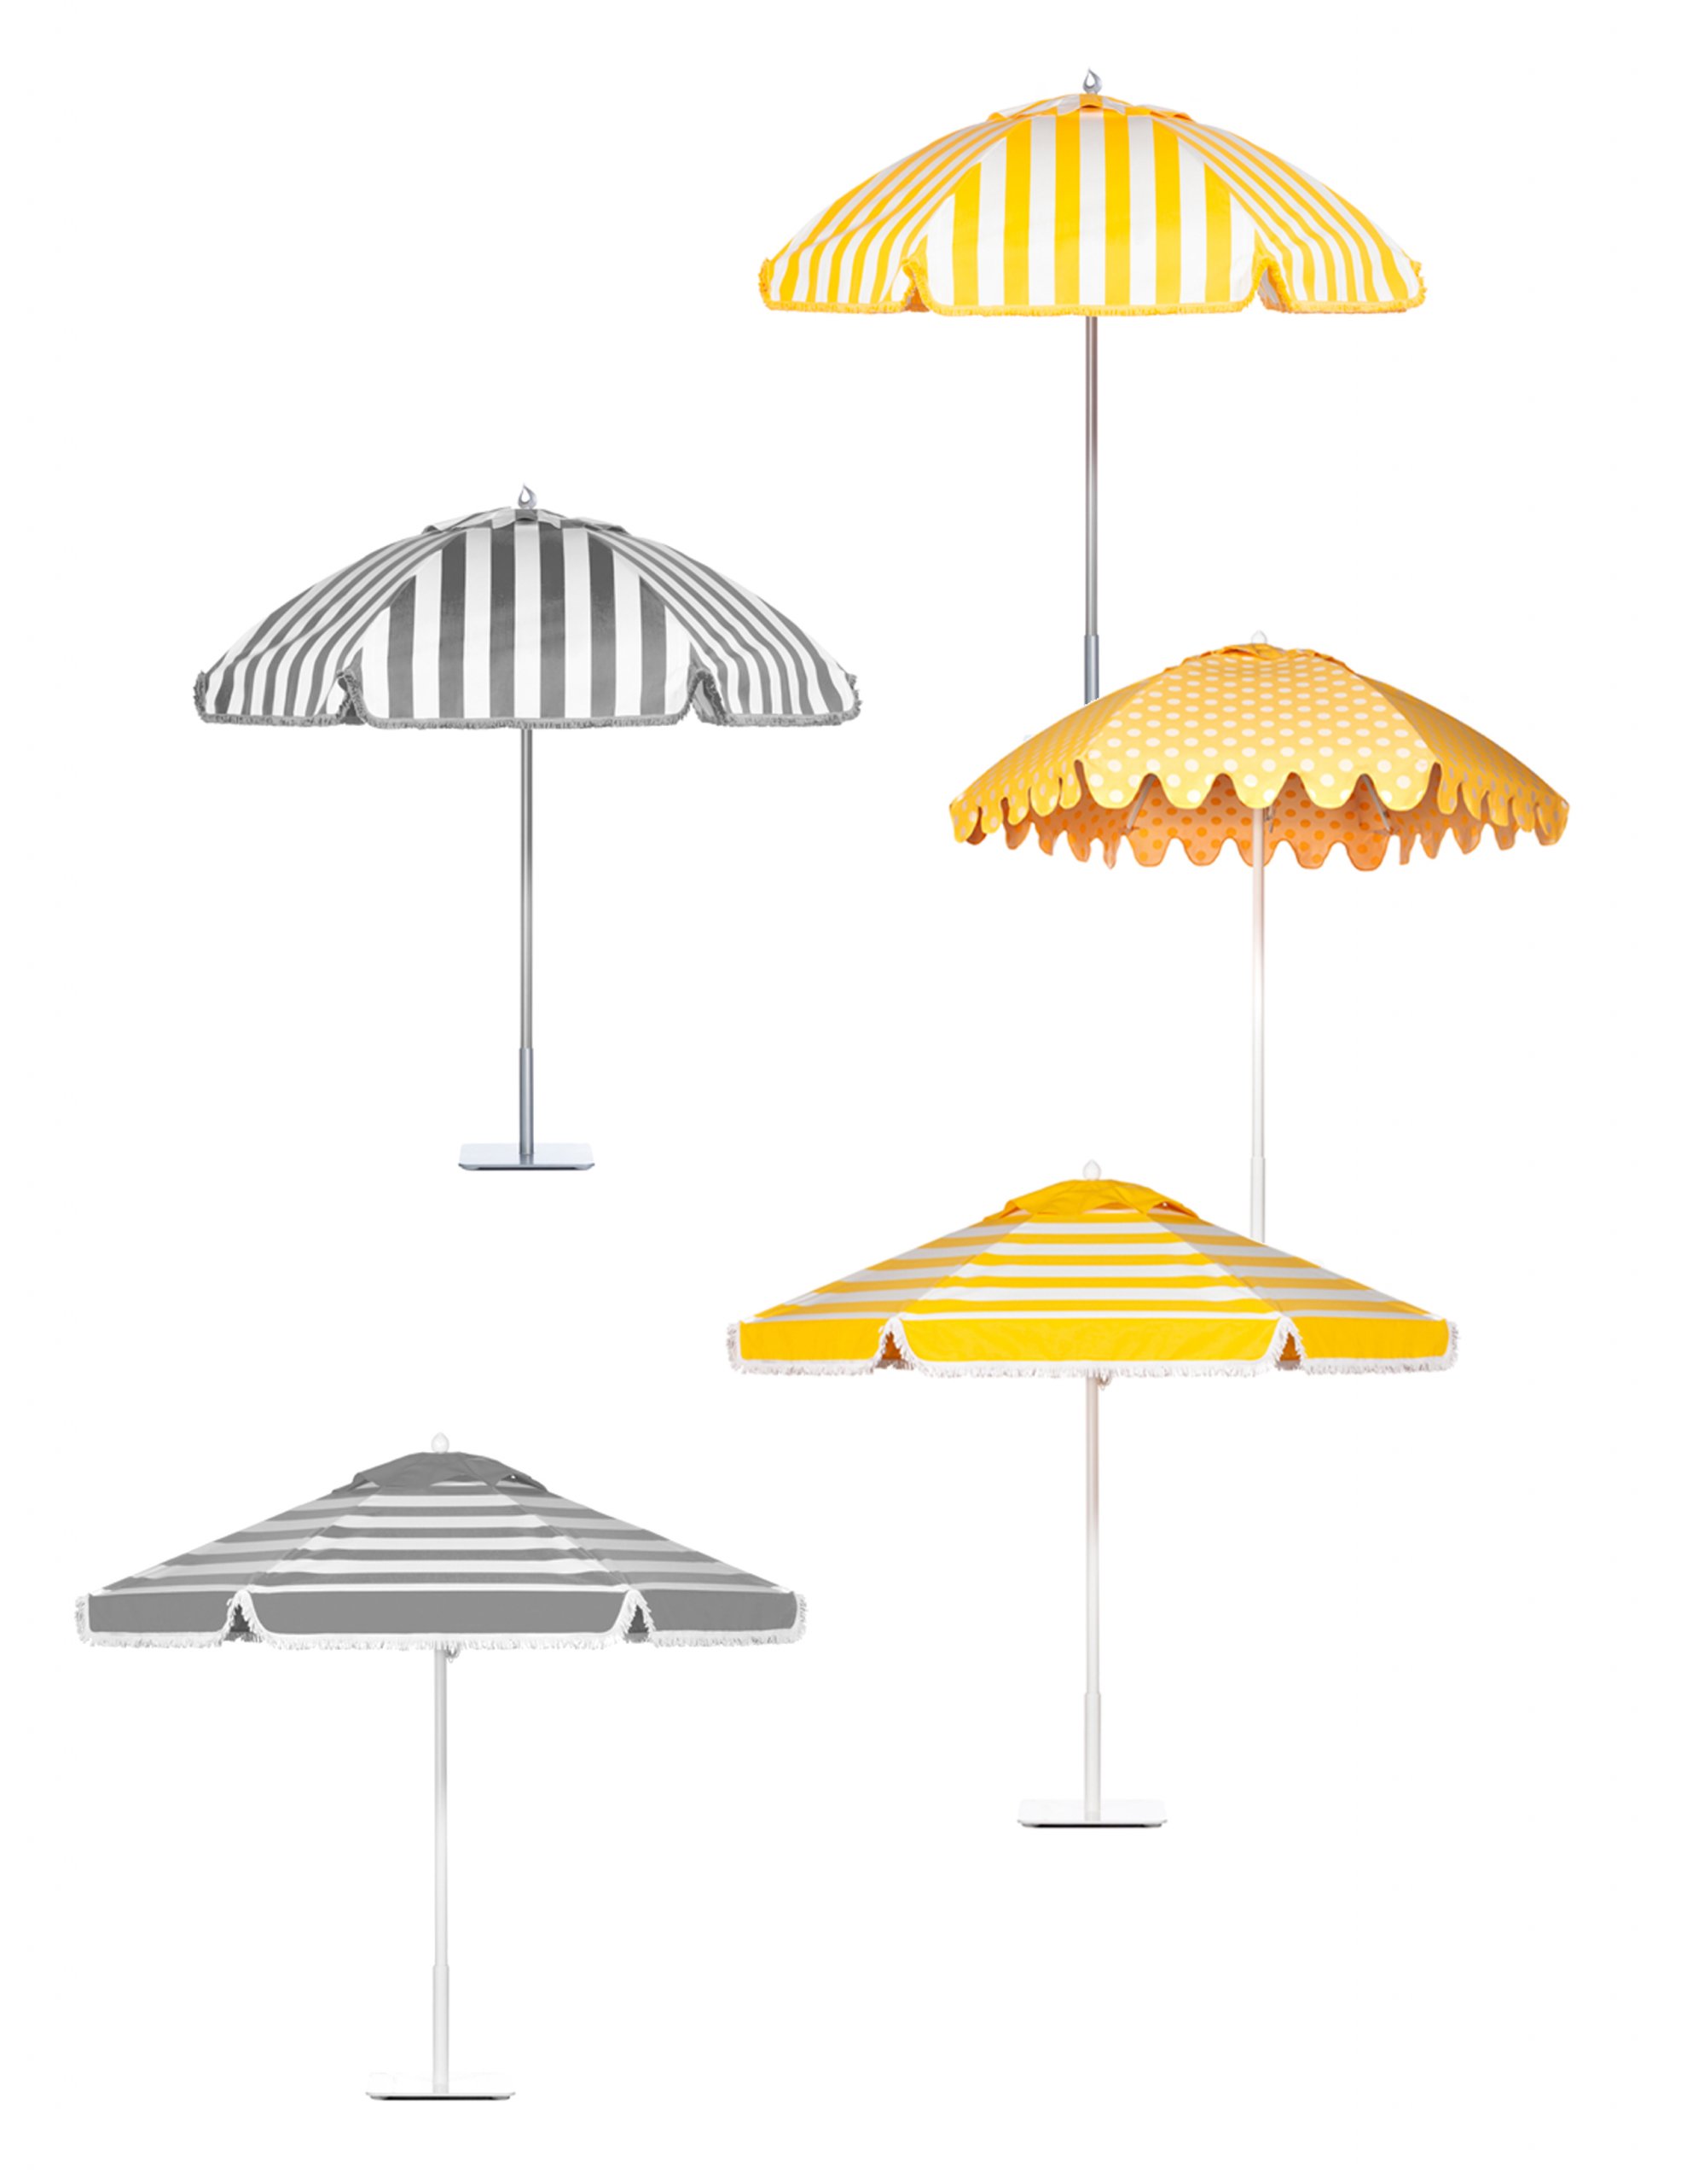 Stacked Umbrellas Image